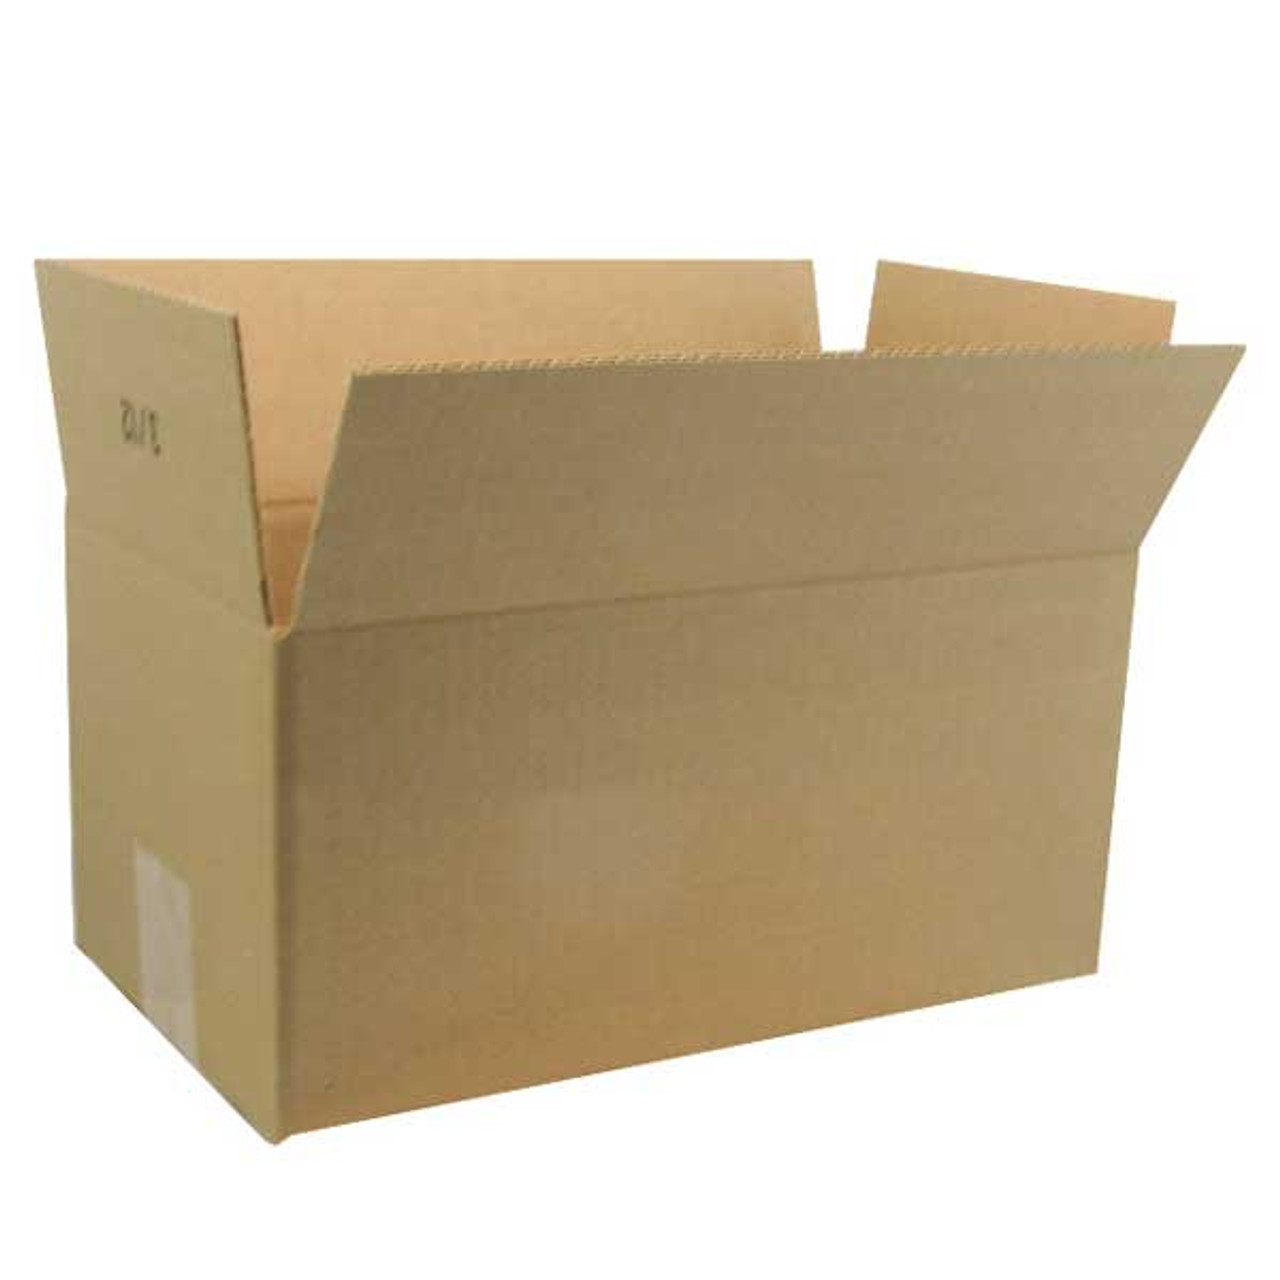 24"w x 16-1/2"d x 11"h  Corrugated Kraft Shipping Box - ea.